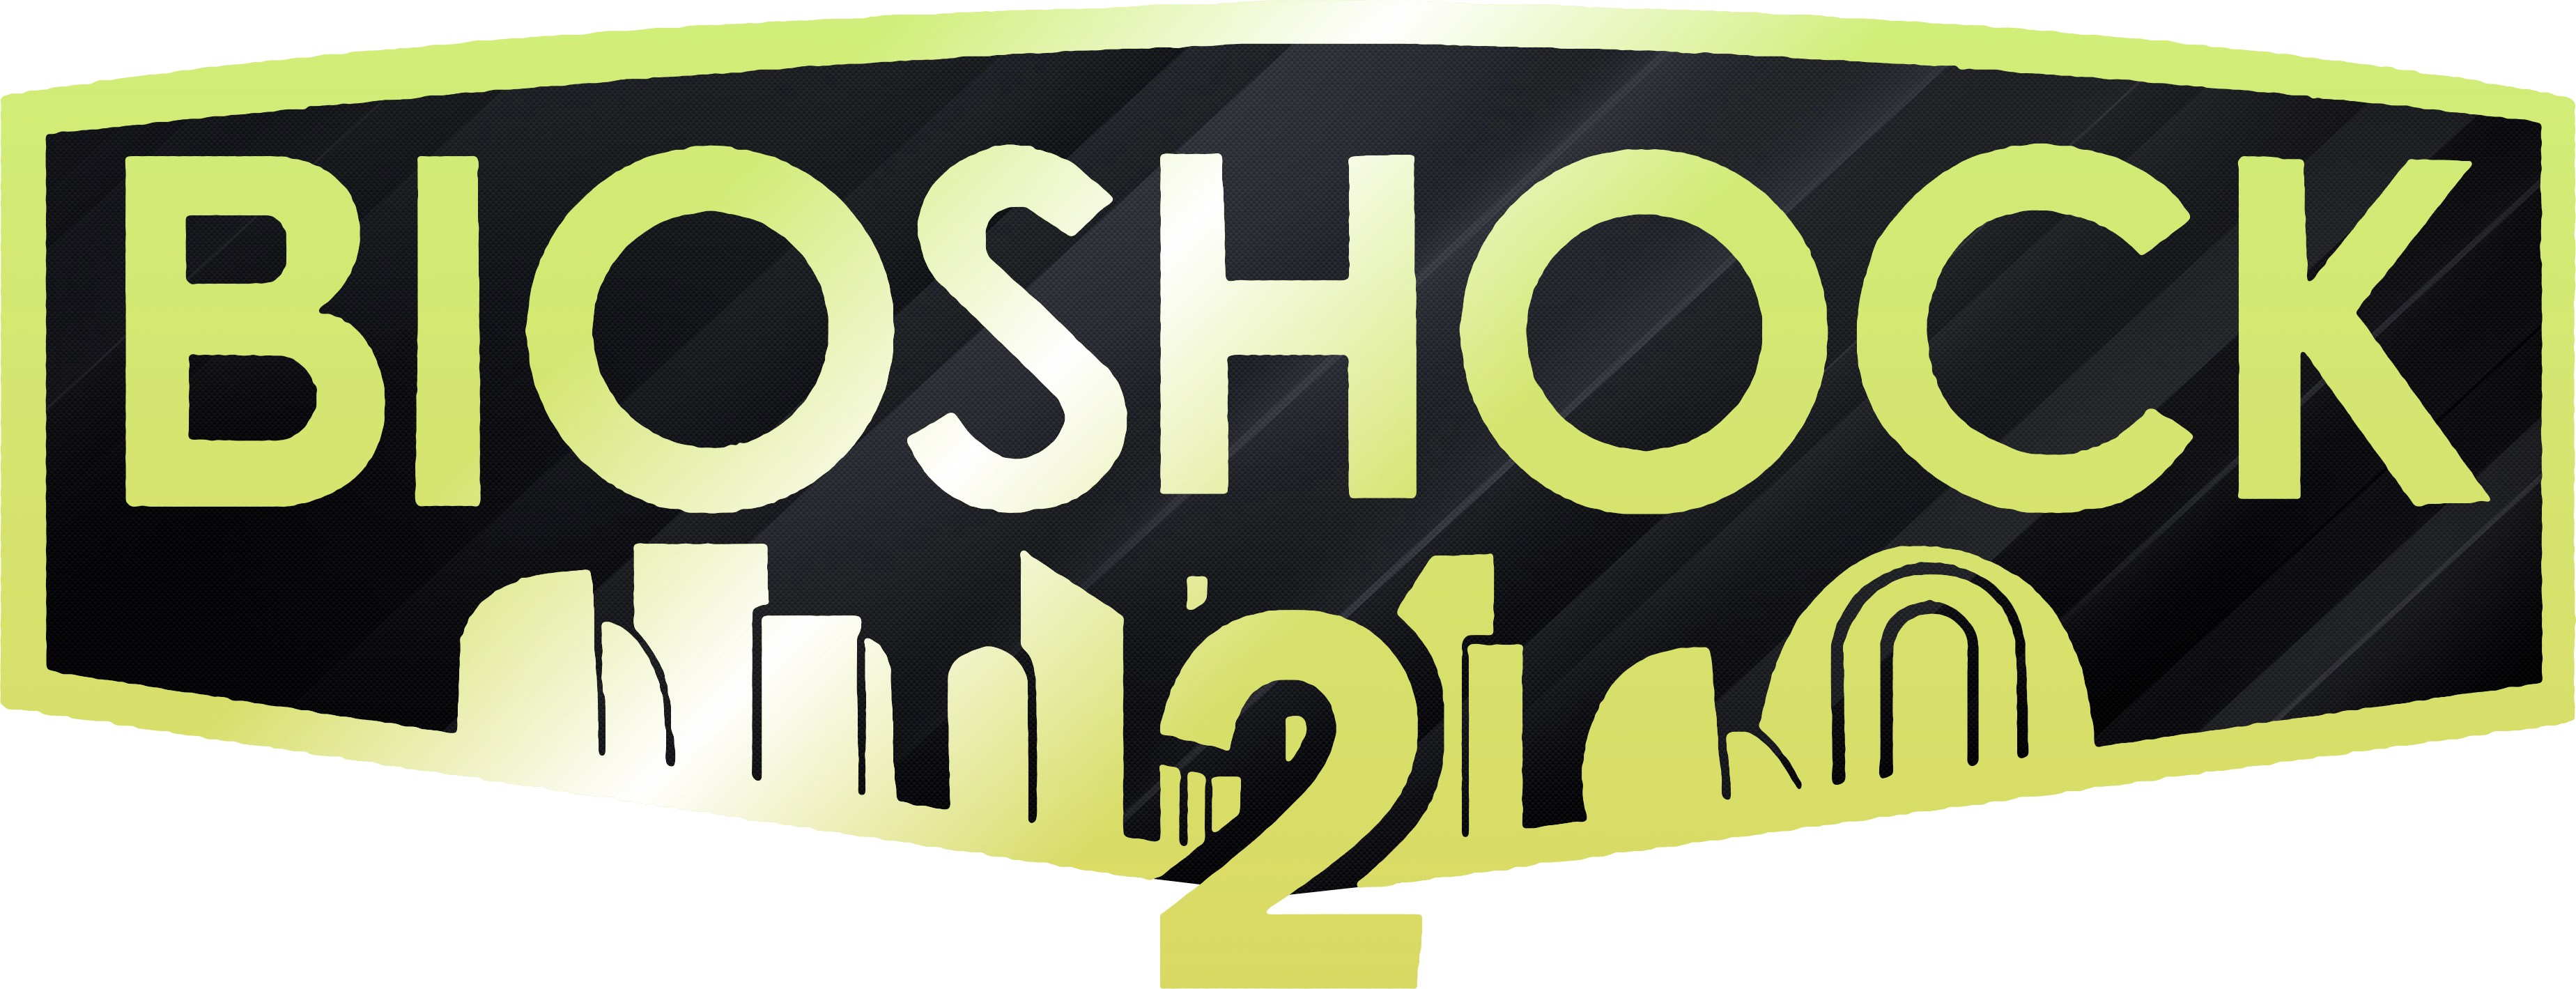 BioShock Logo PNG HD Images